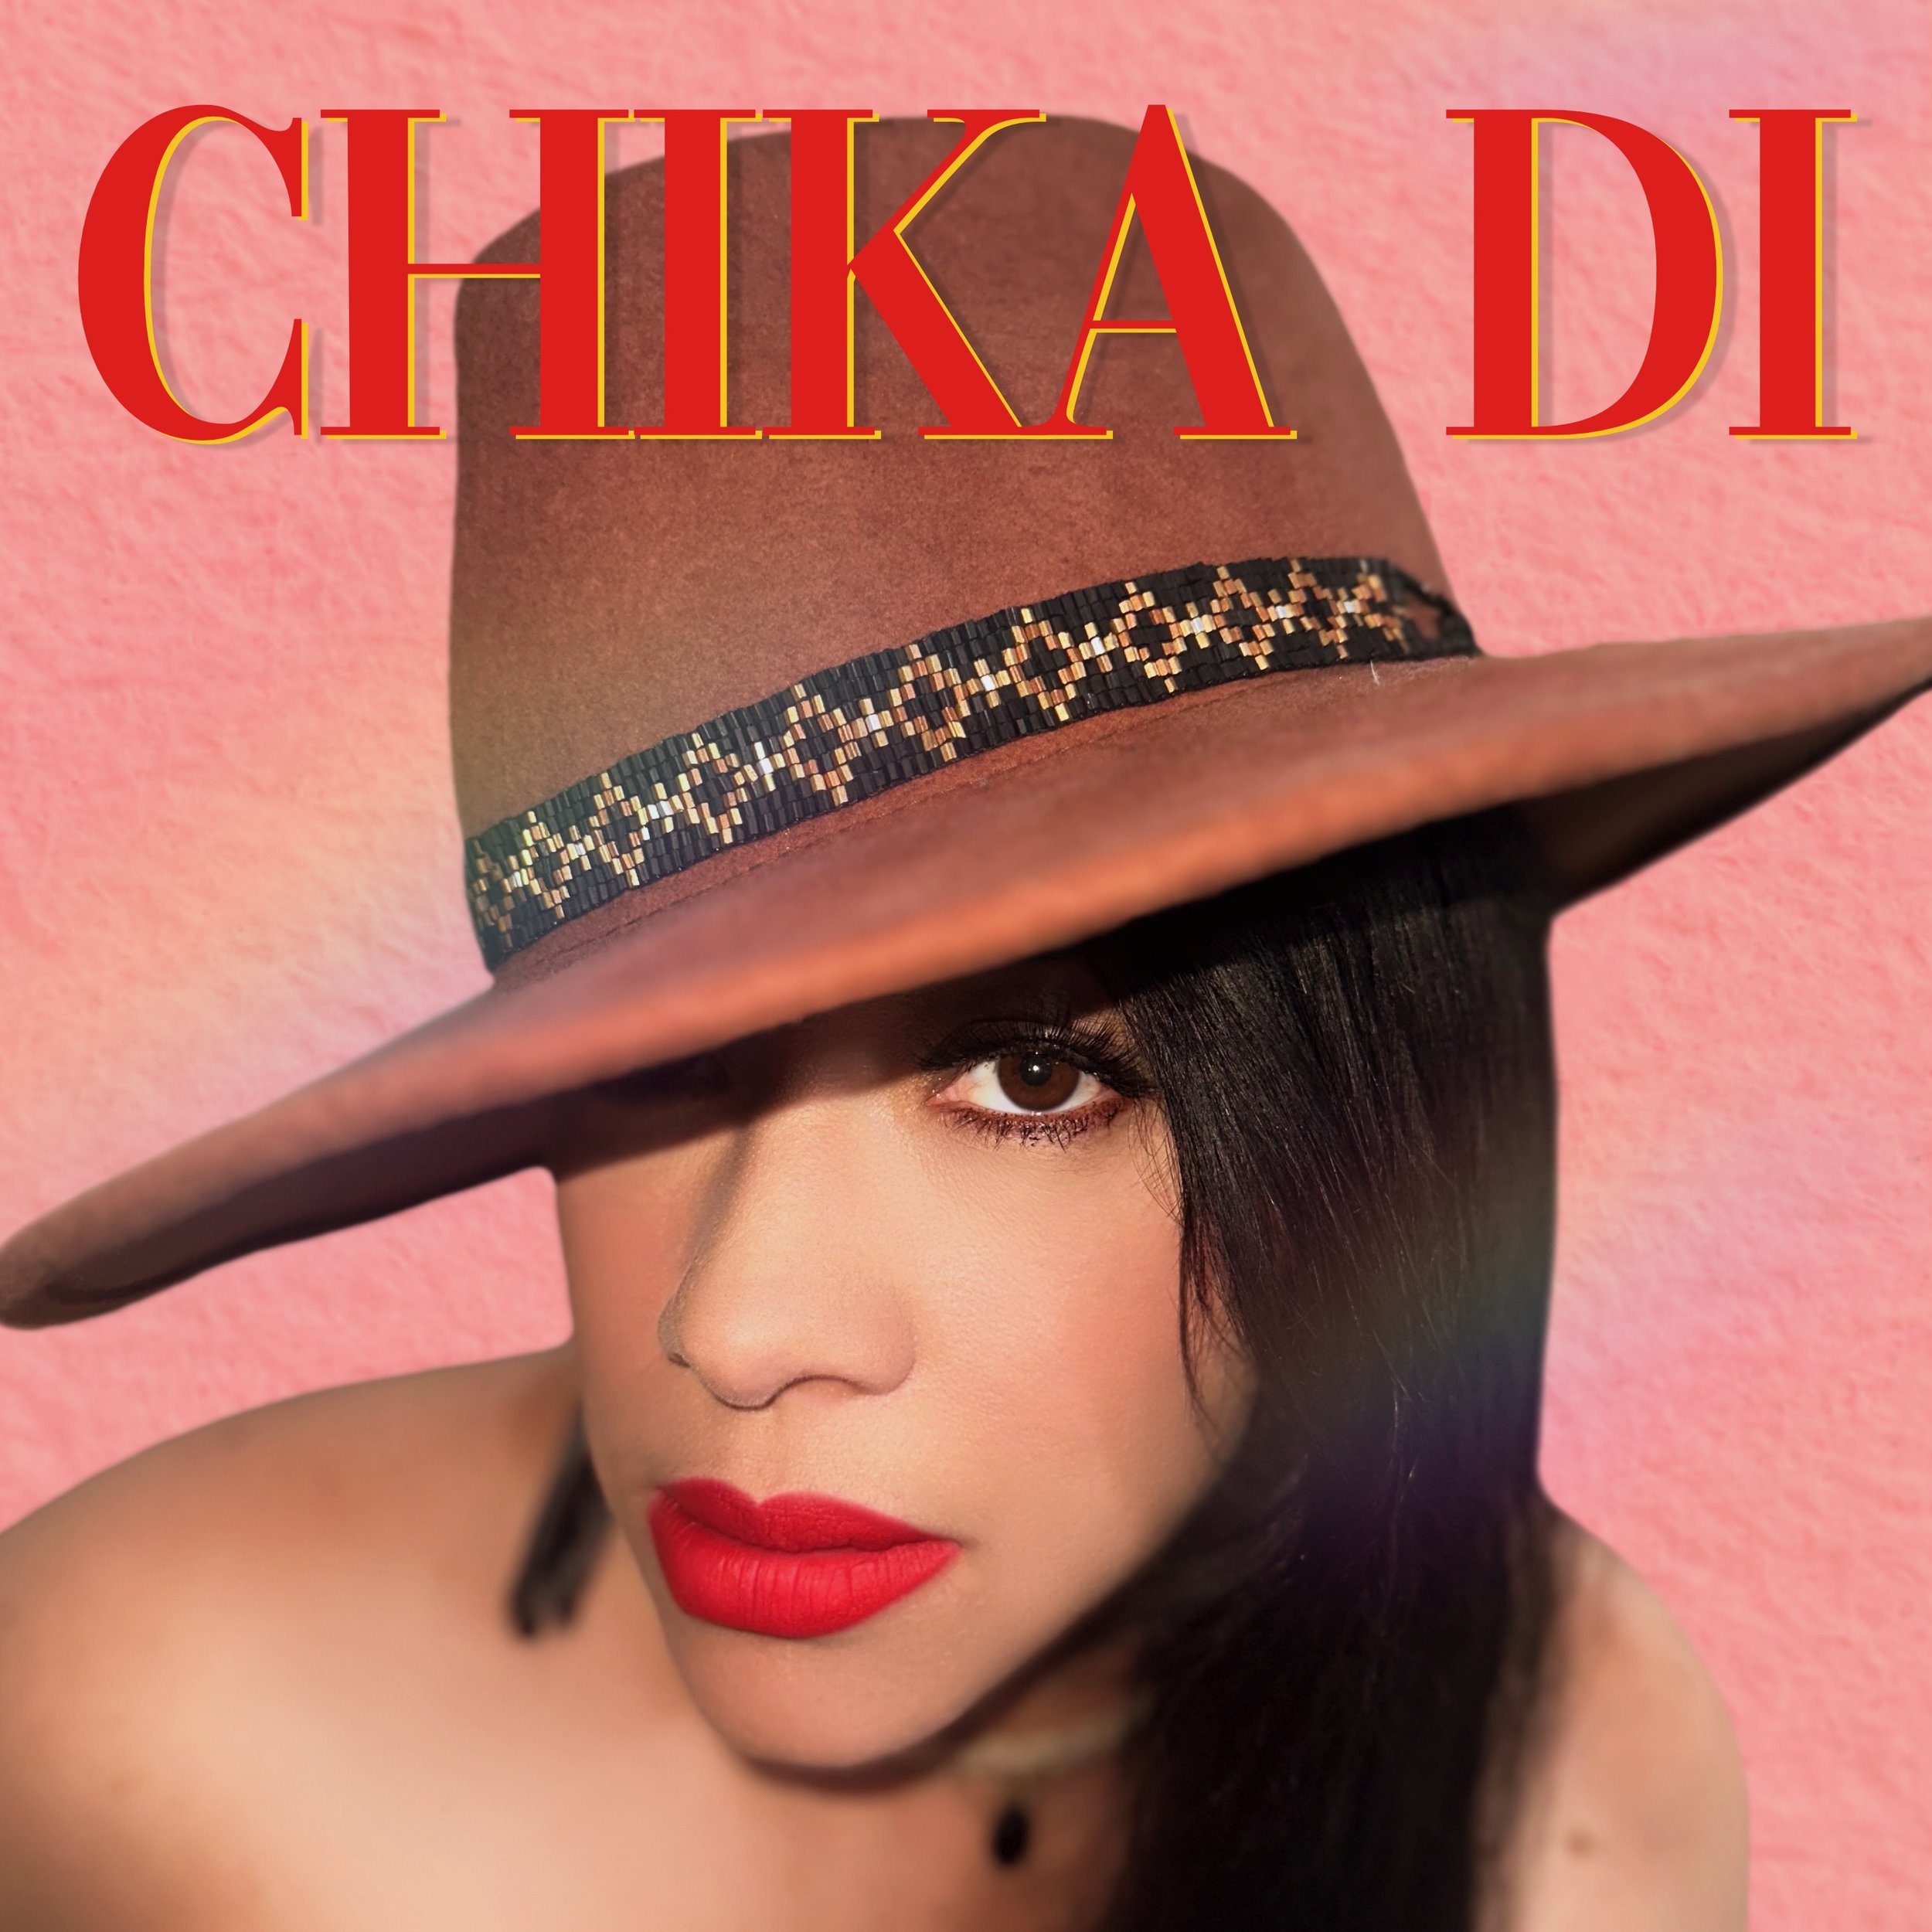 Chika Di - Album Art - Chika Di_3000x3000.jpeg